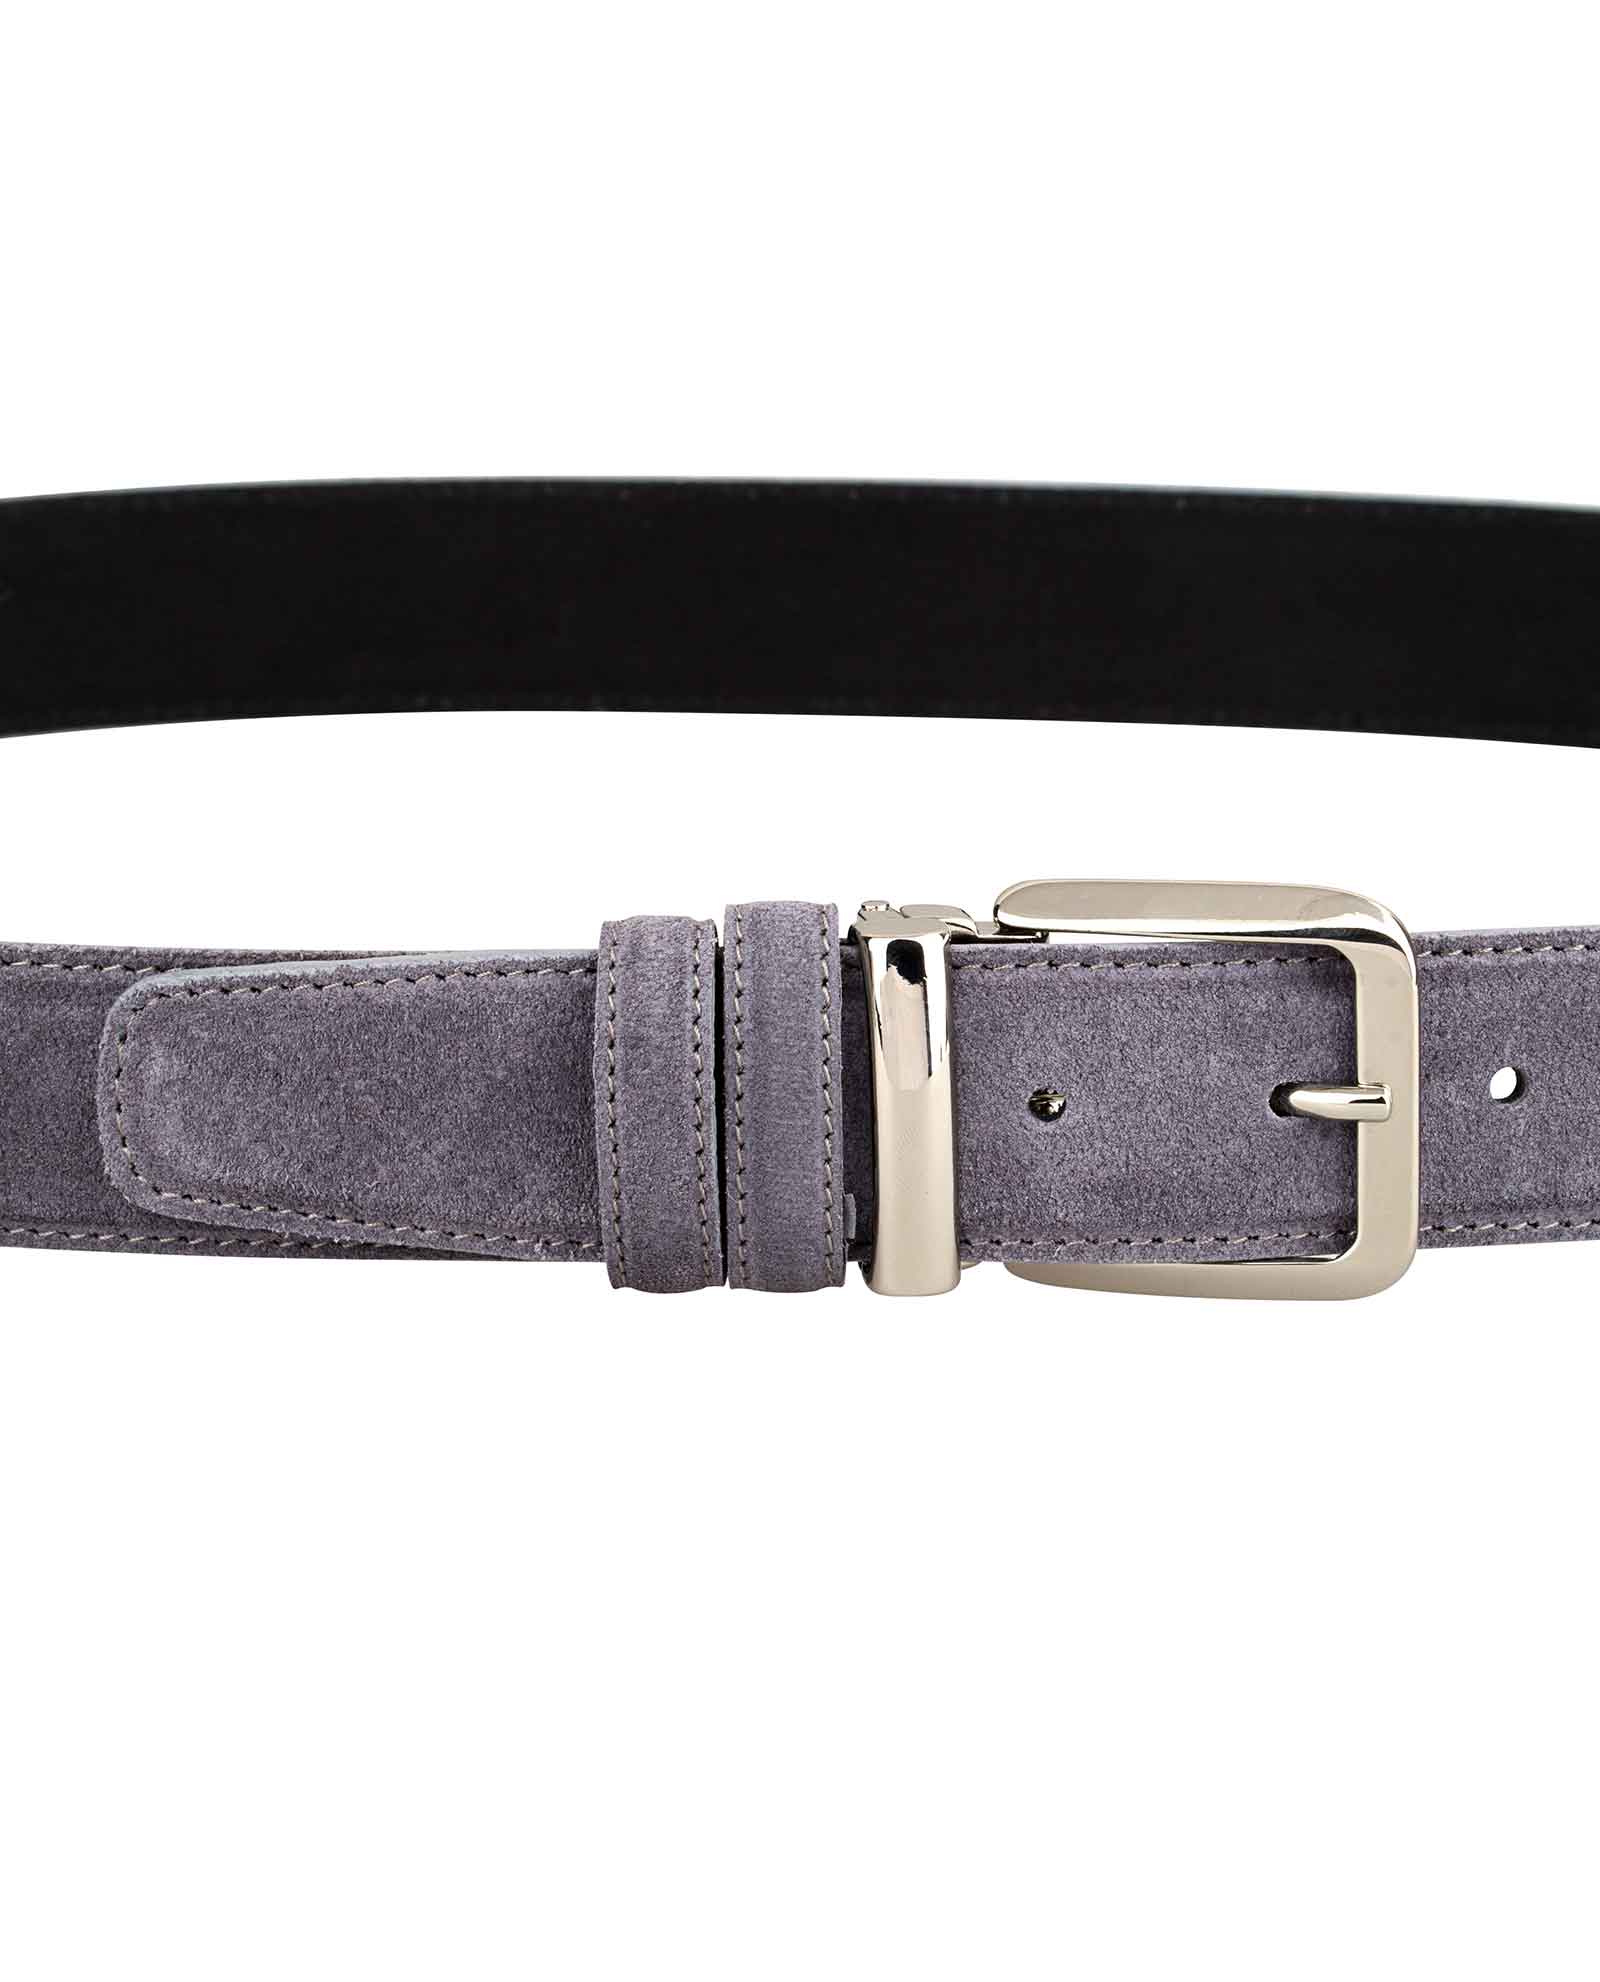 Buy Gray Suede Belt | Italian leather and buckle | LeatherBeltsOnline.com